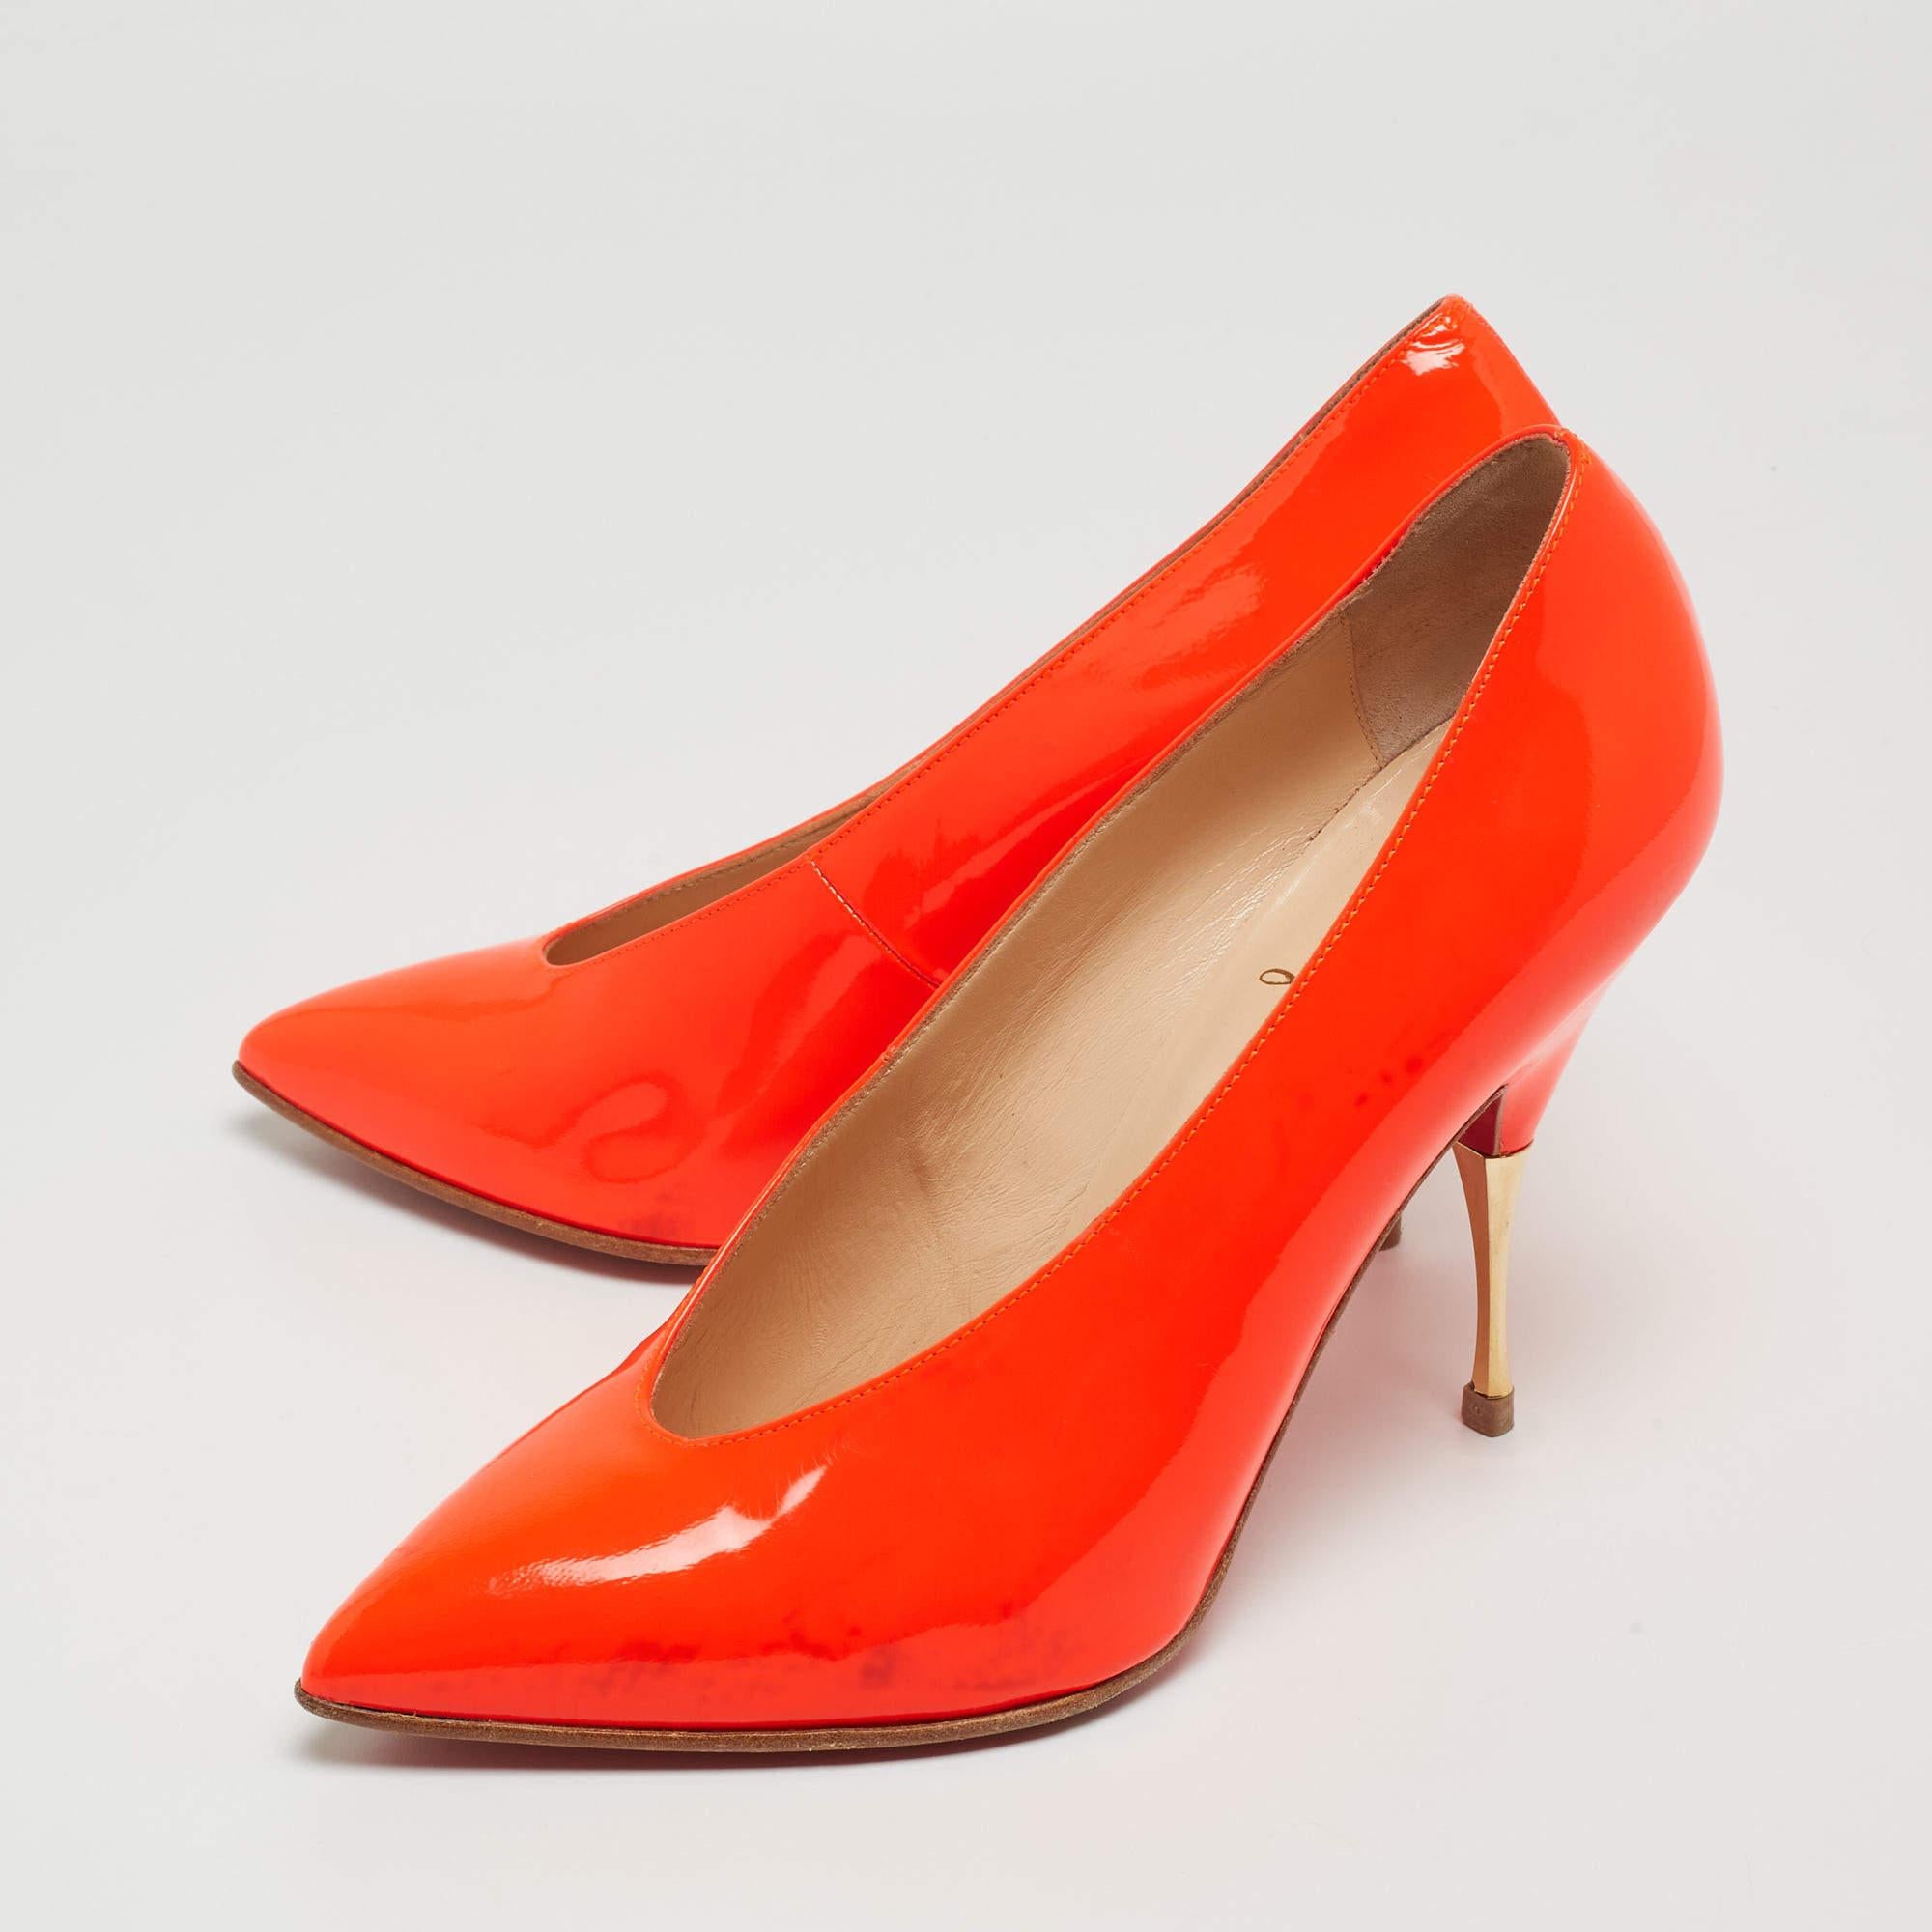 Christian Louboutin Neon Orange Patent Leather Lola Pumps Size 38 For Sale 3